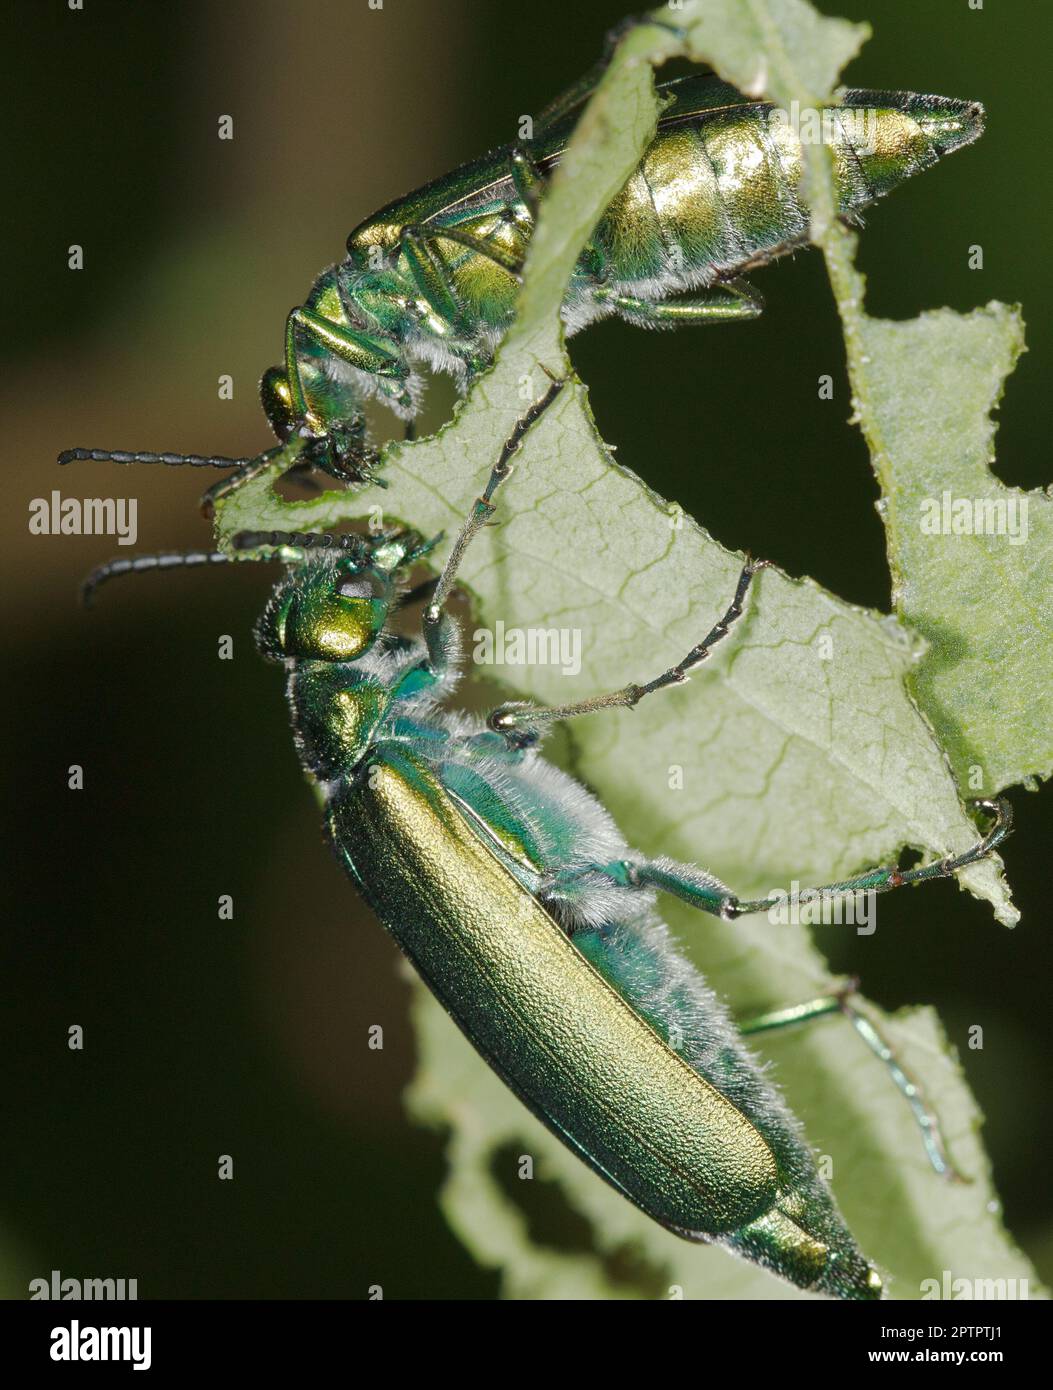 Spanish fly (Lytta vesicatoria) blister beetle, eating a leaf. macro photography. Stock Photo